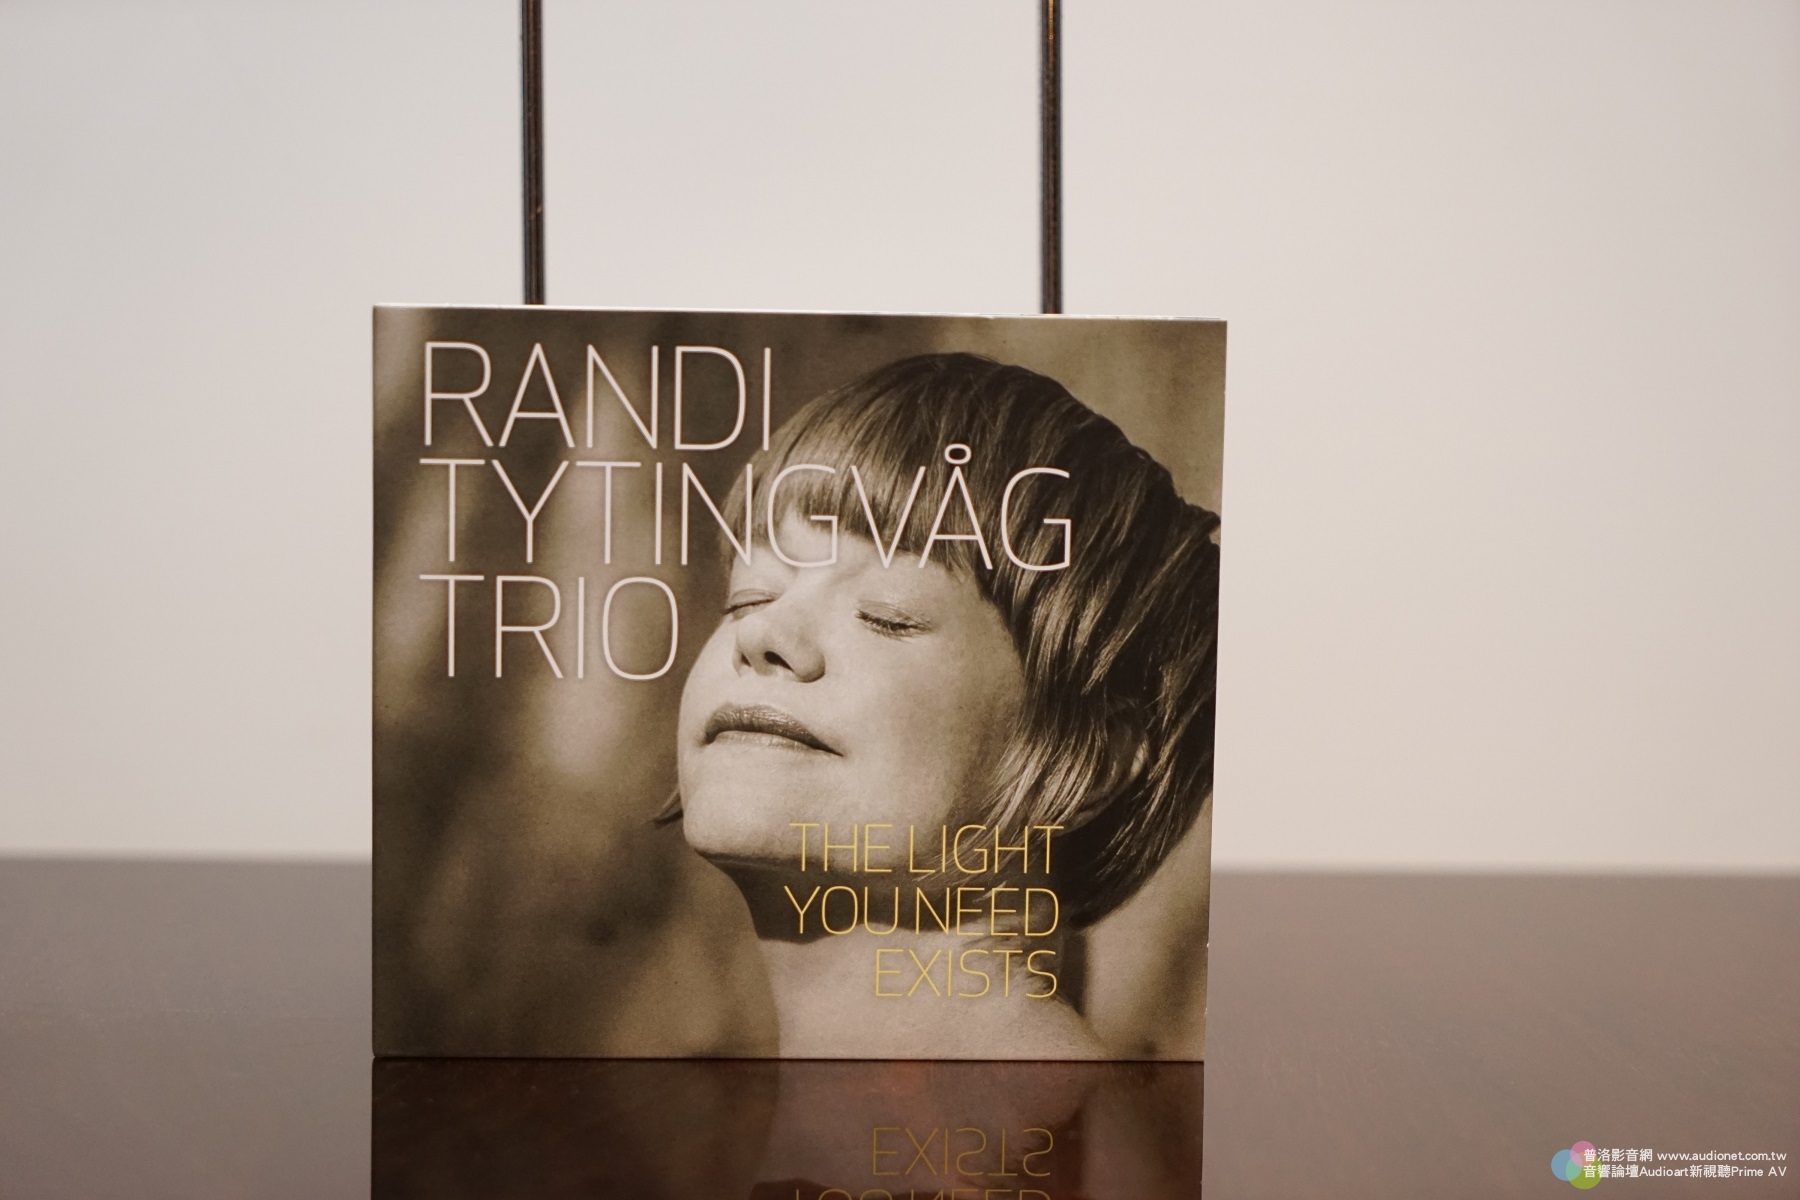 The Light You Need Exists Randi Tytingvag Trio第一首就感人